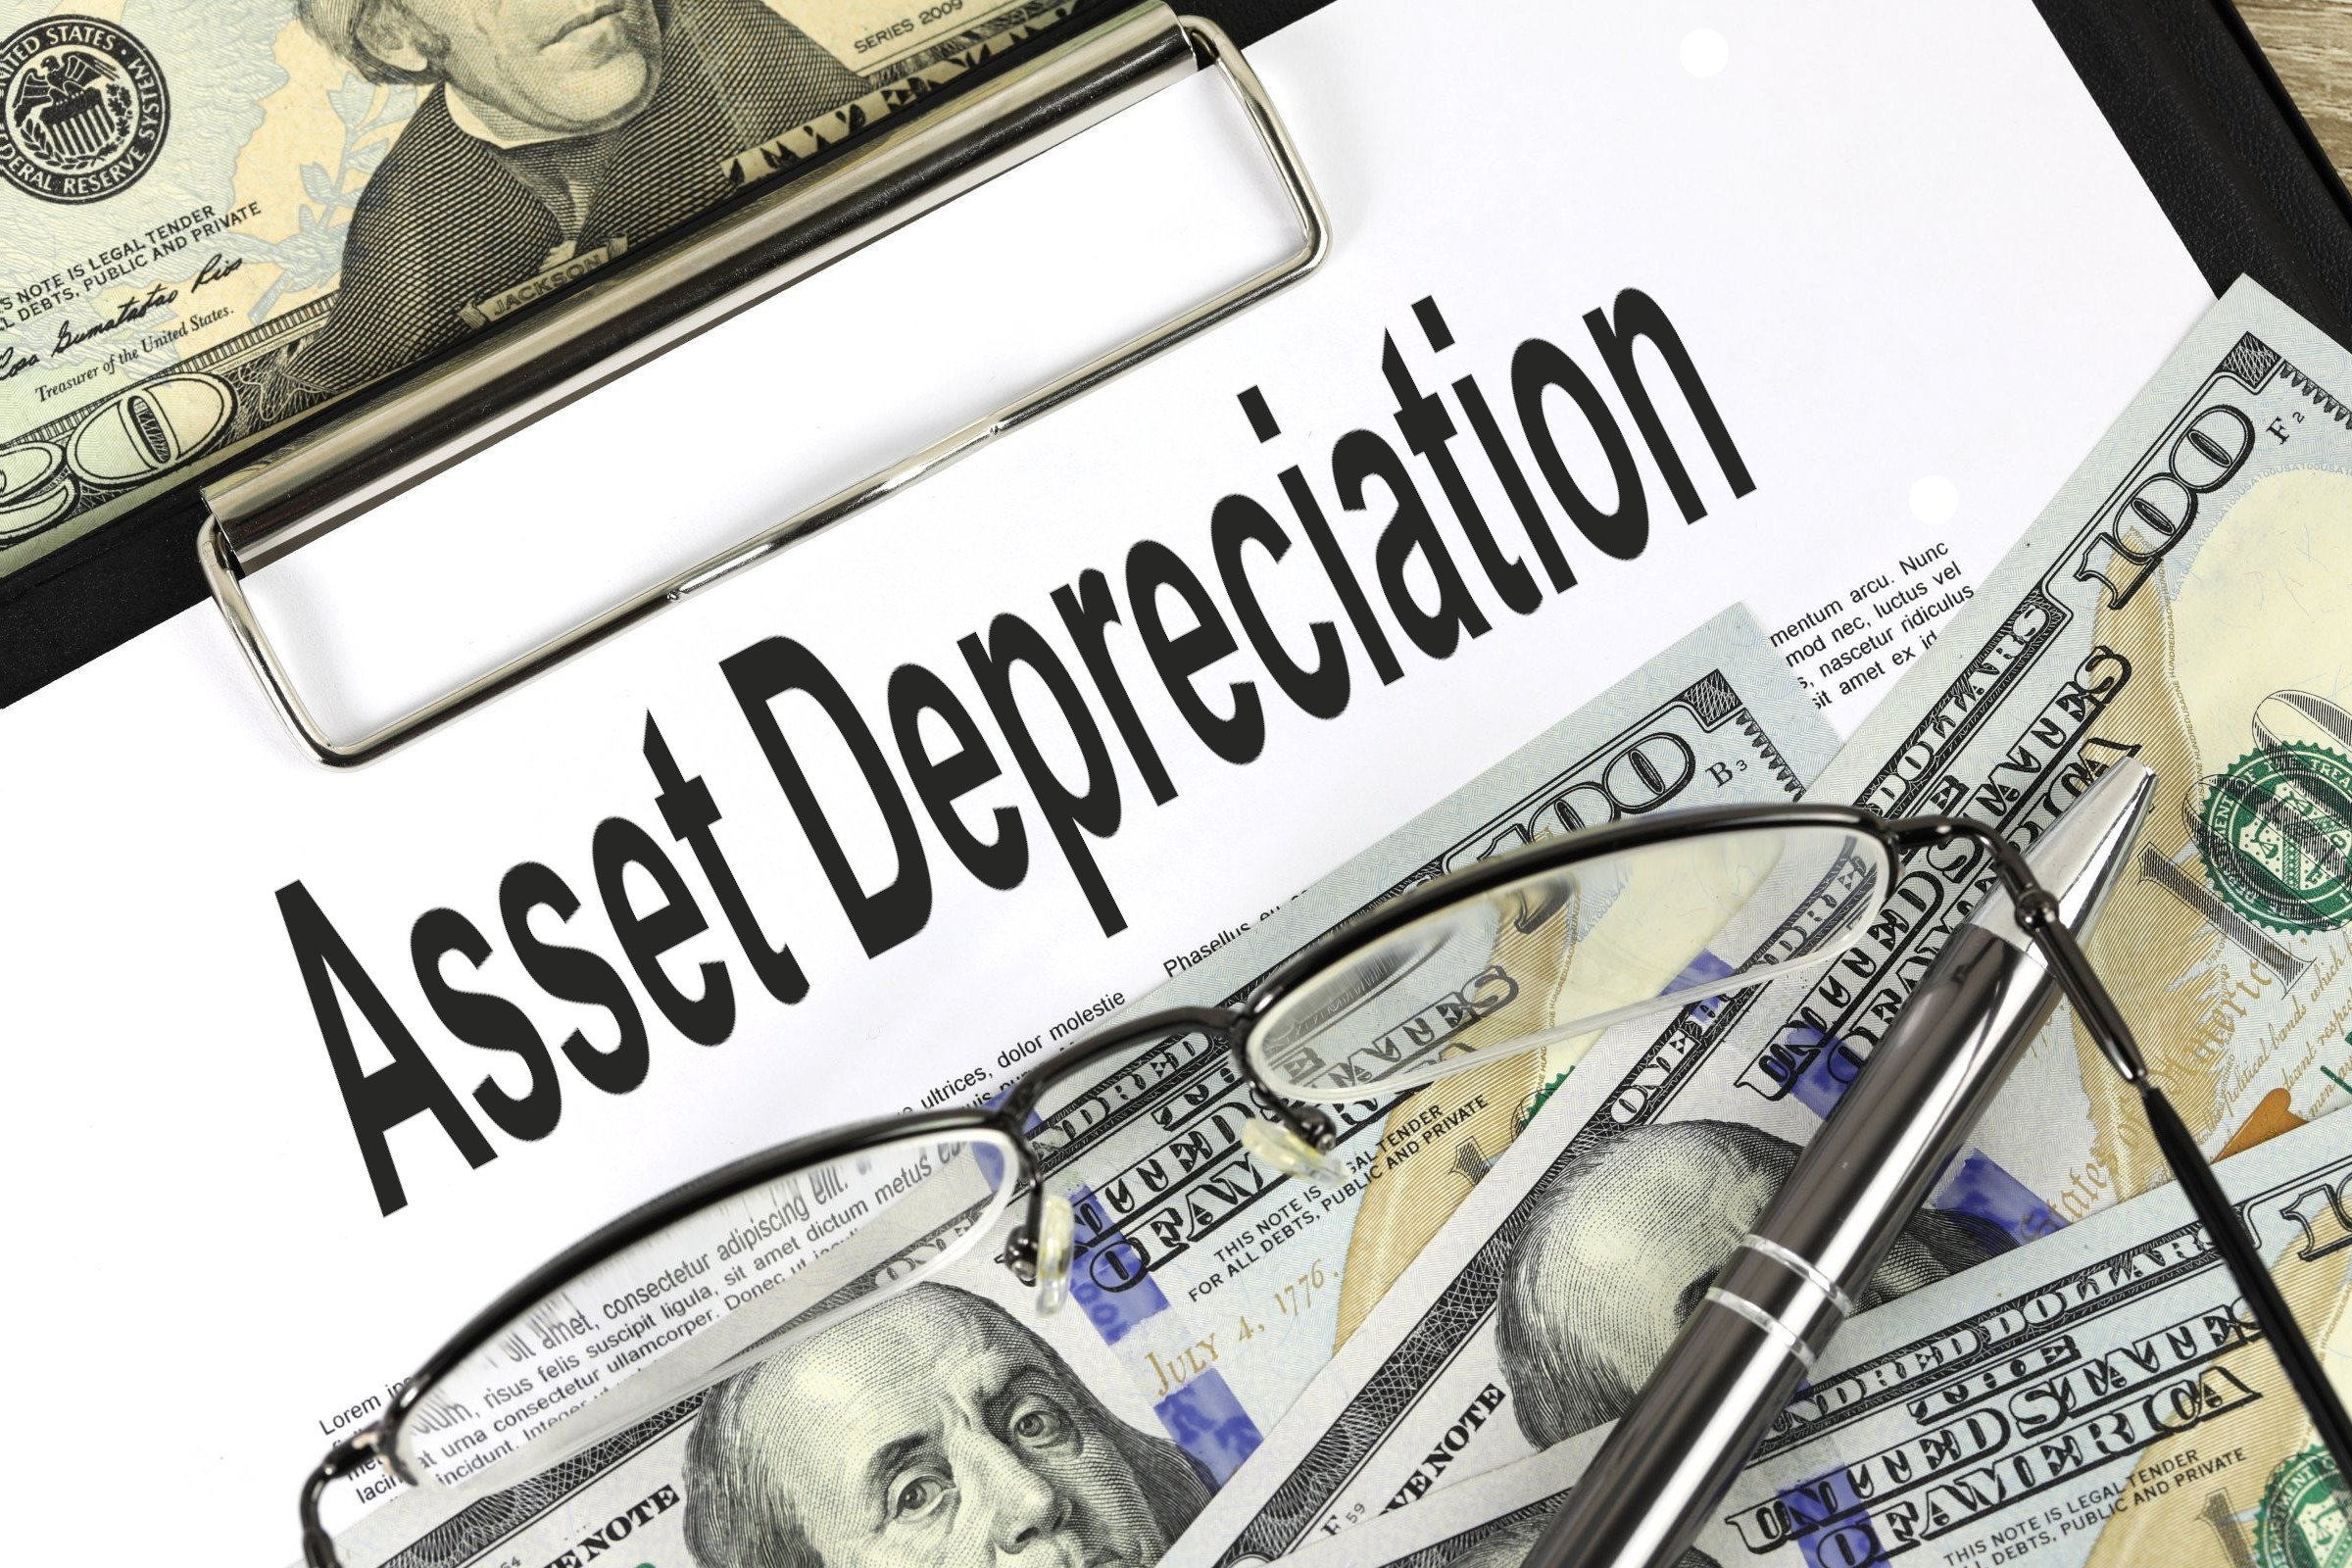 asset depreciation